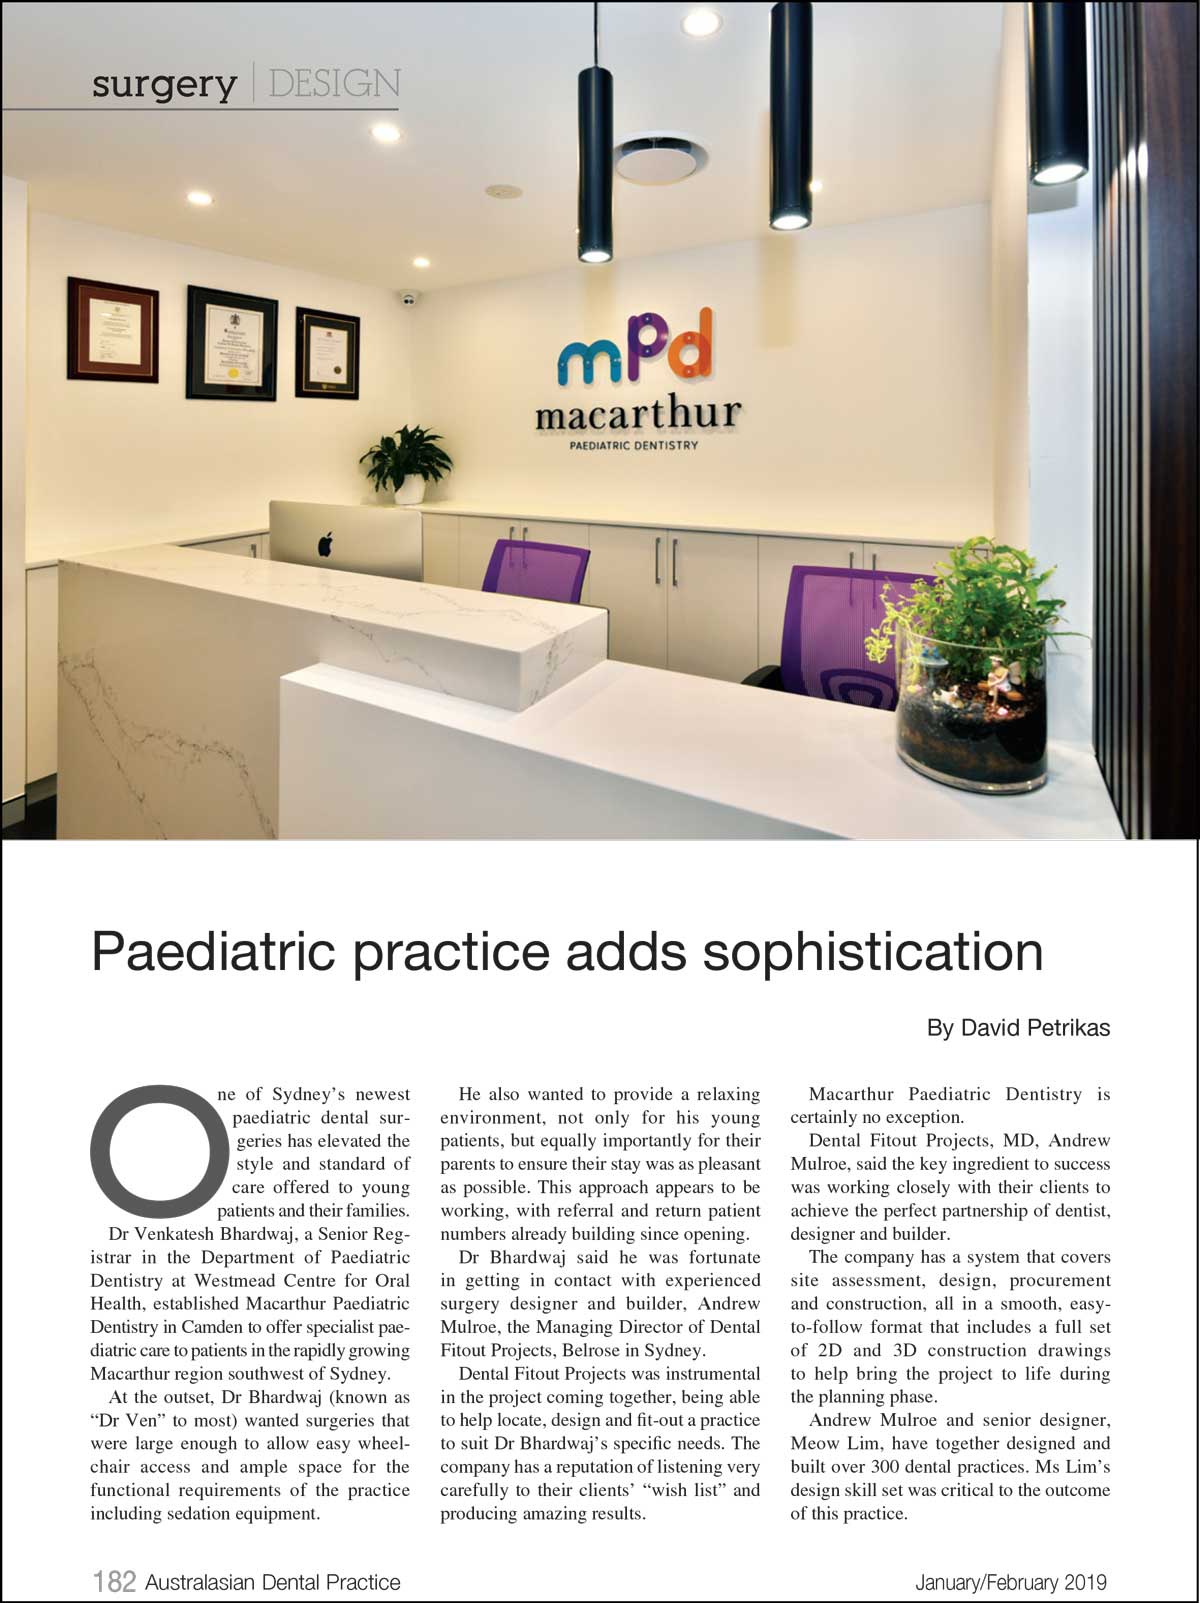 Case Study: Macarthur Paediatric Dentistry